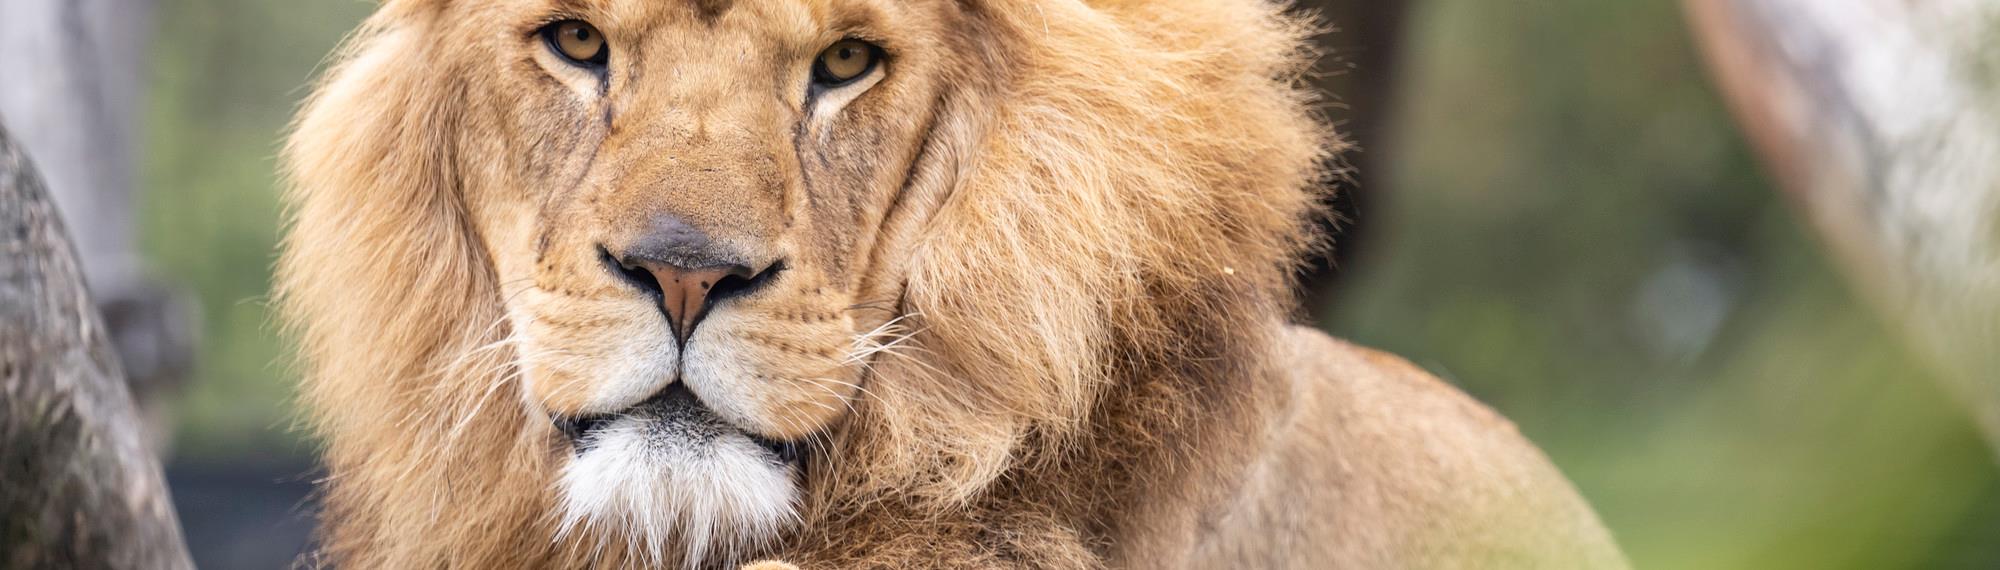 A close-up of a golden male lion's face